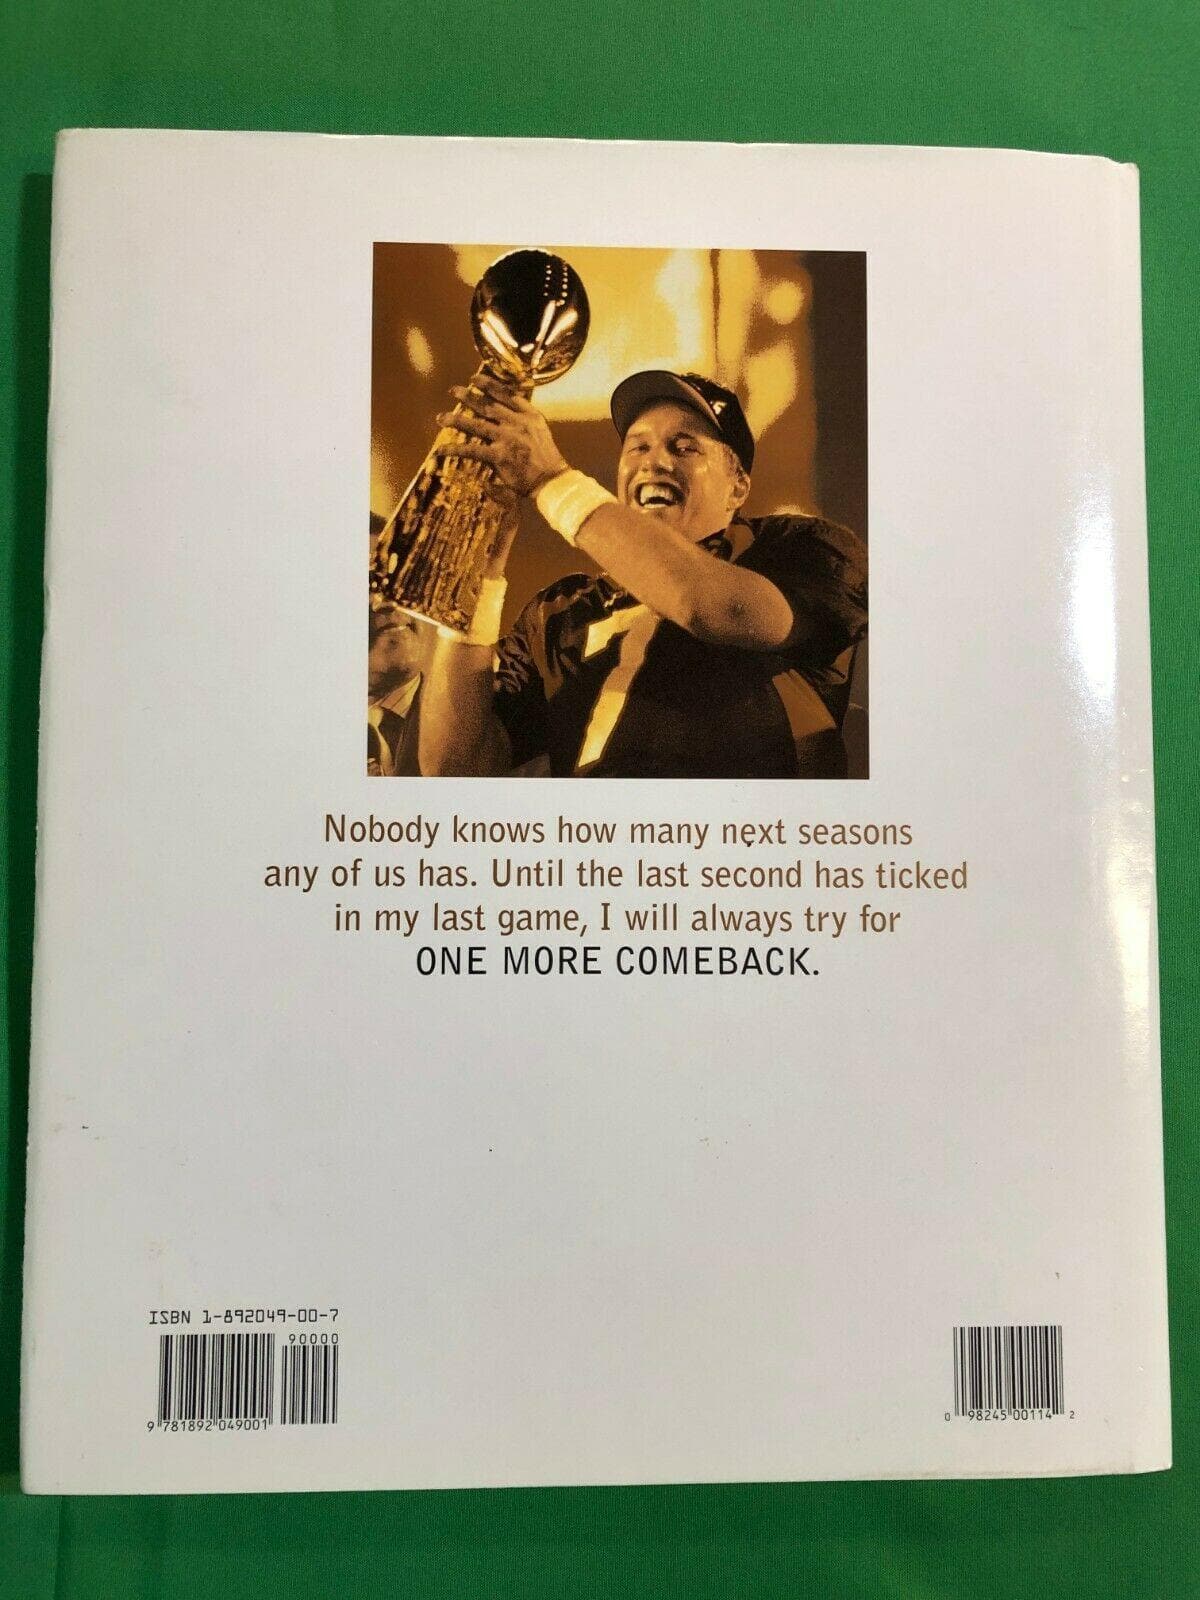 NFL Denver Broncos John Elway #7 "Elway" Hardcover Photo Book by Marc Serota